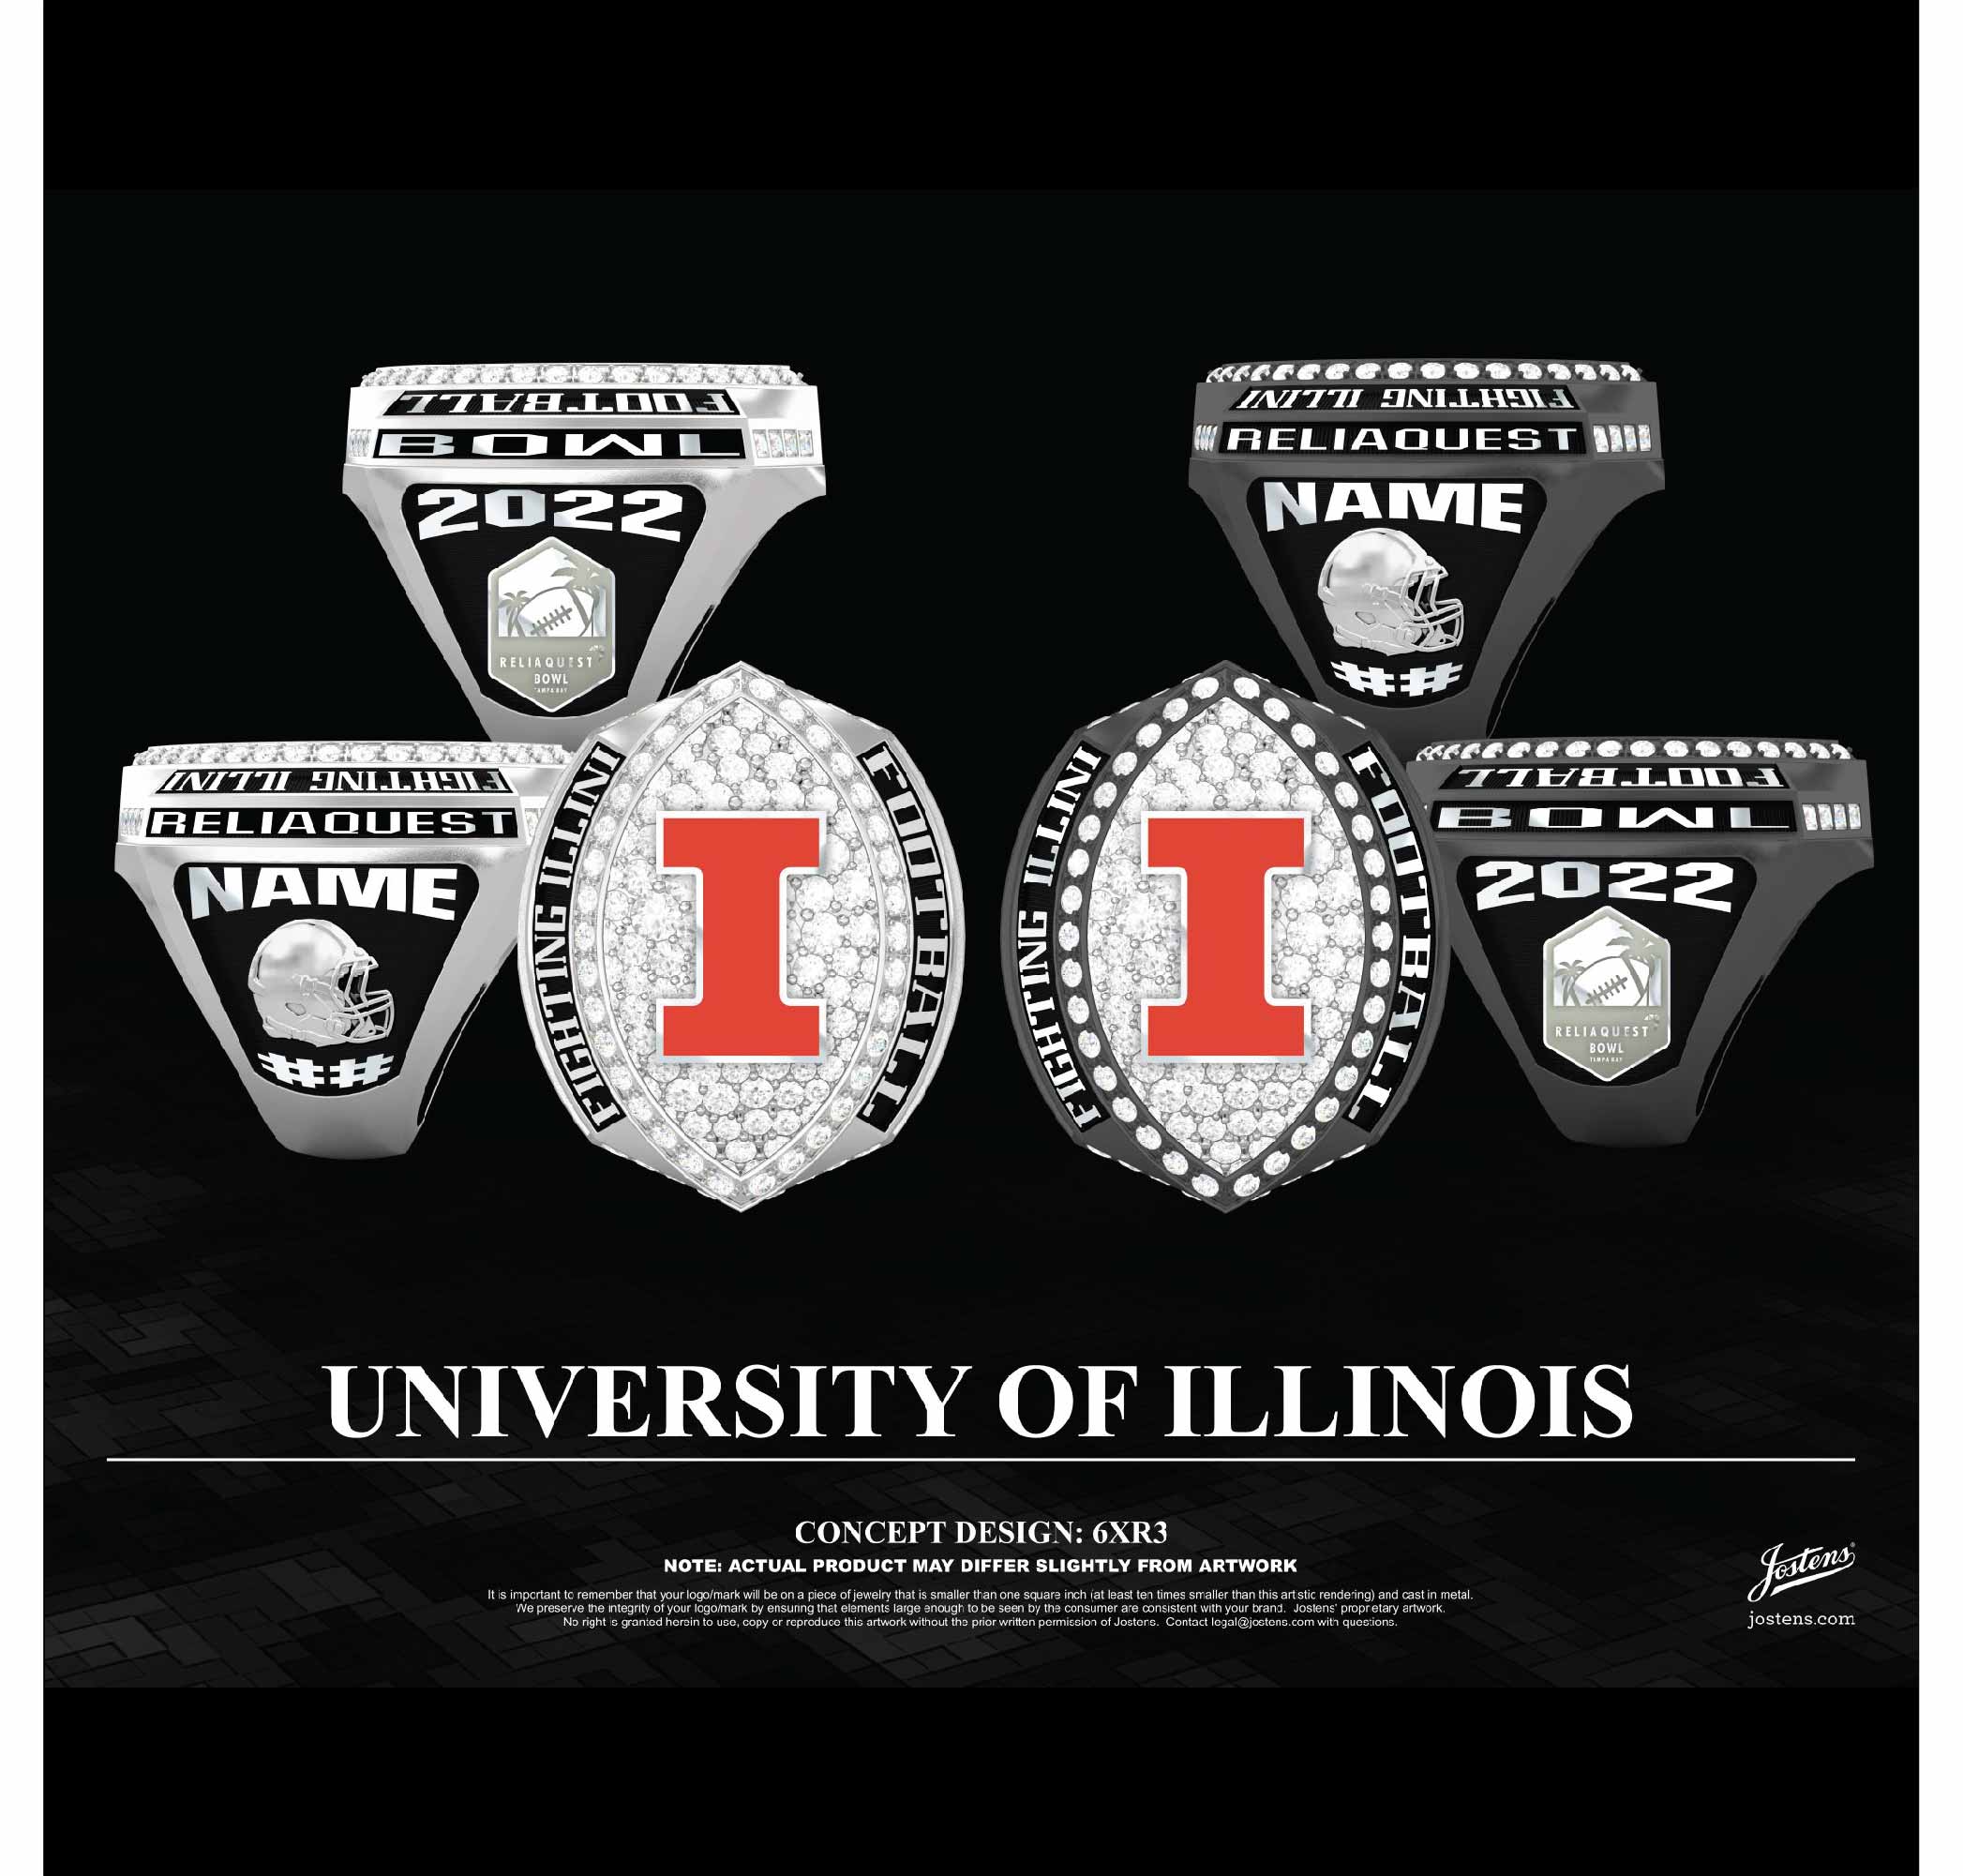 University of Illinois Football 2022 Bowl Championship Ring